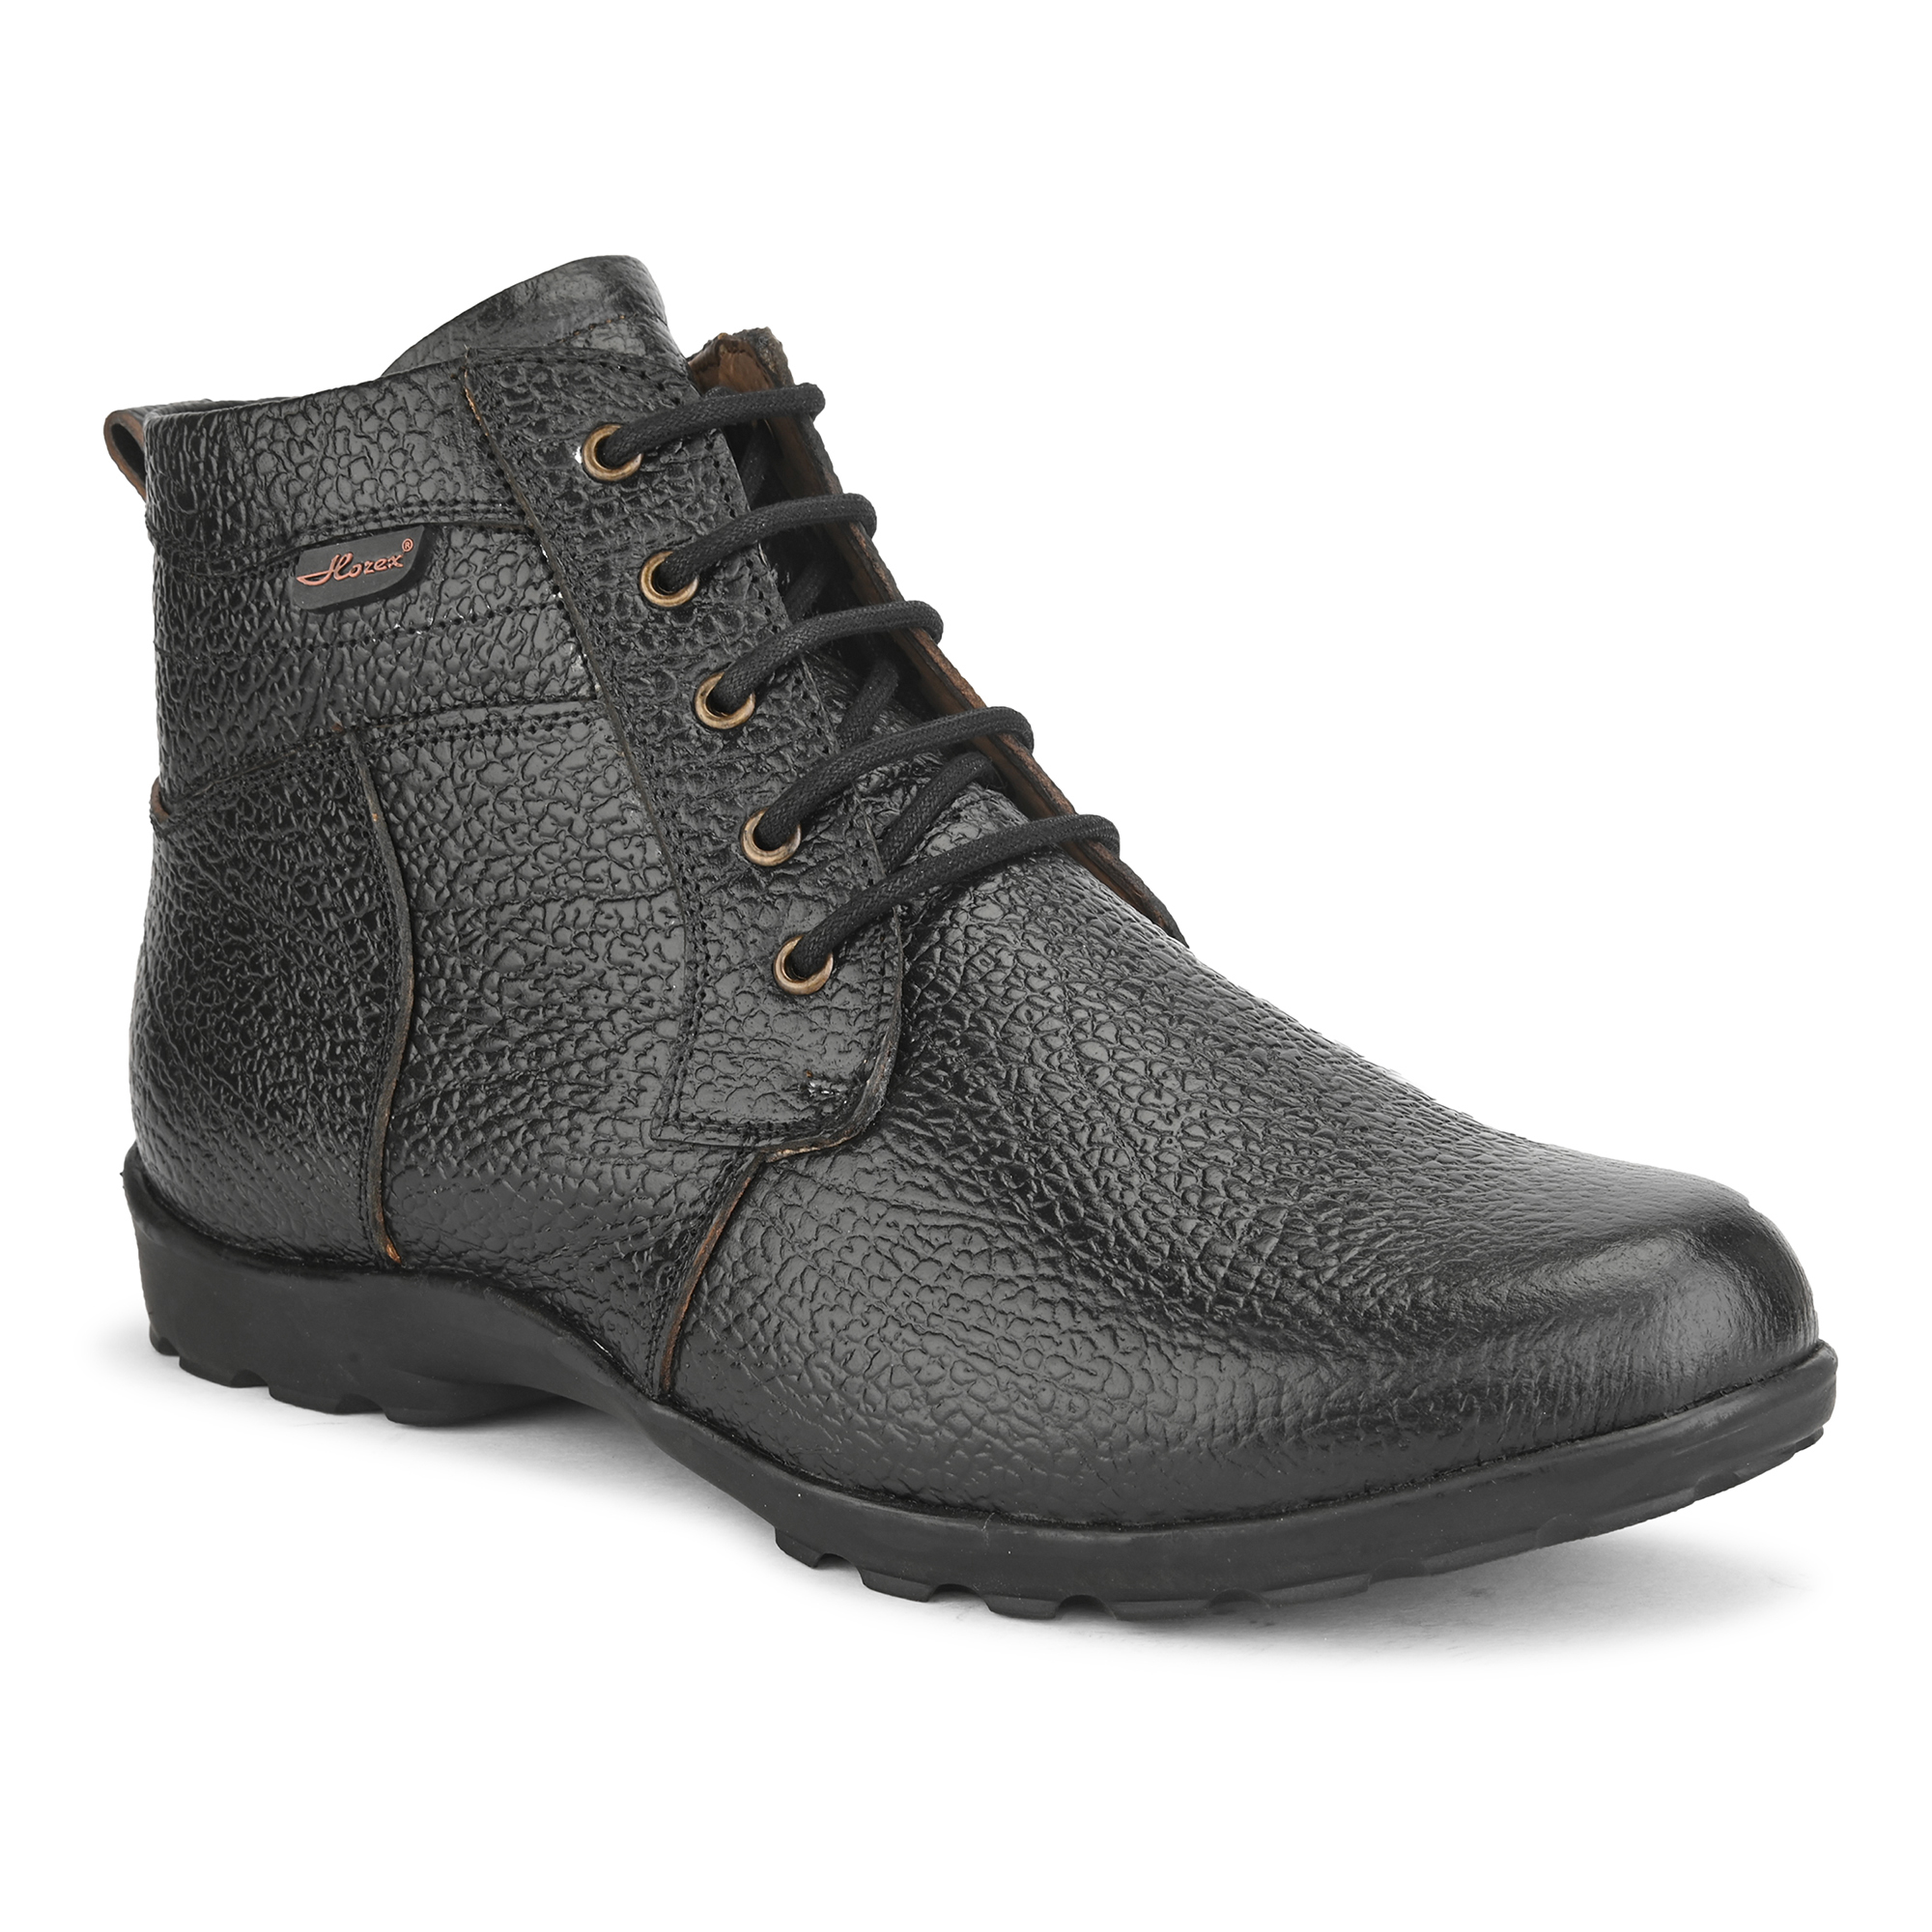 horex black leather boots for men